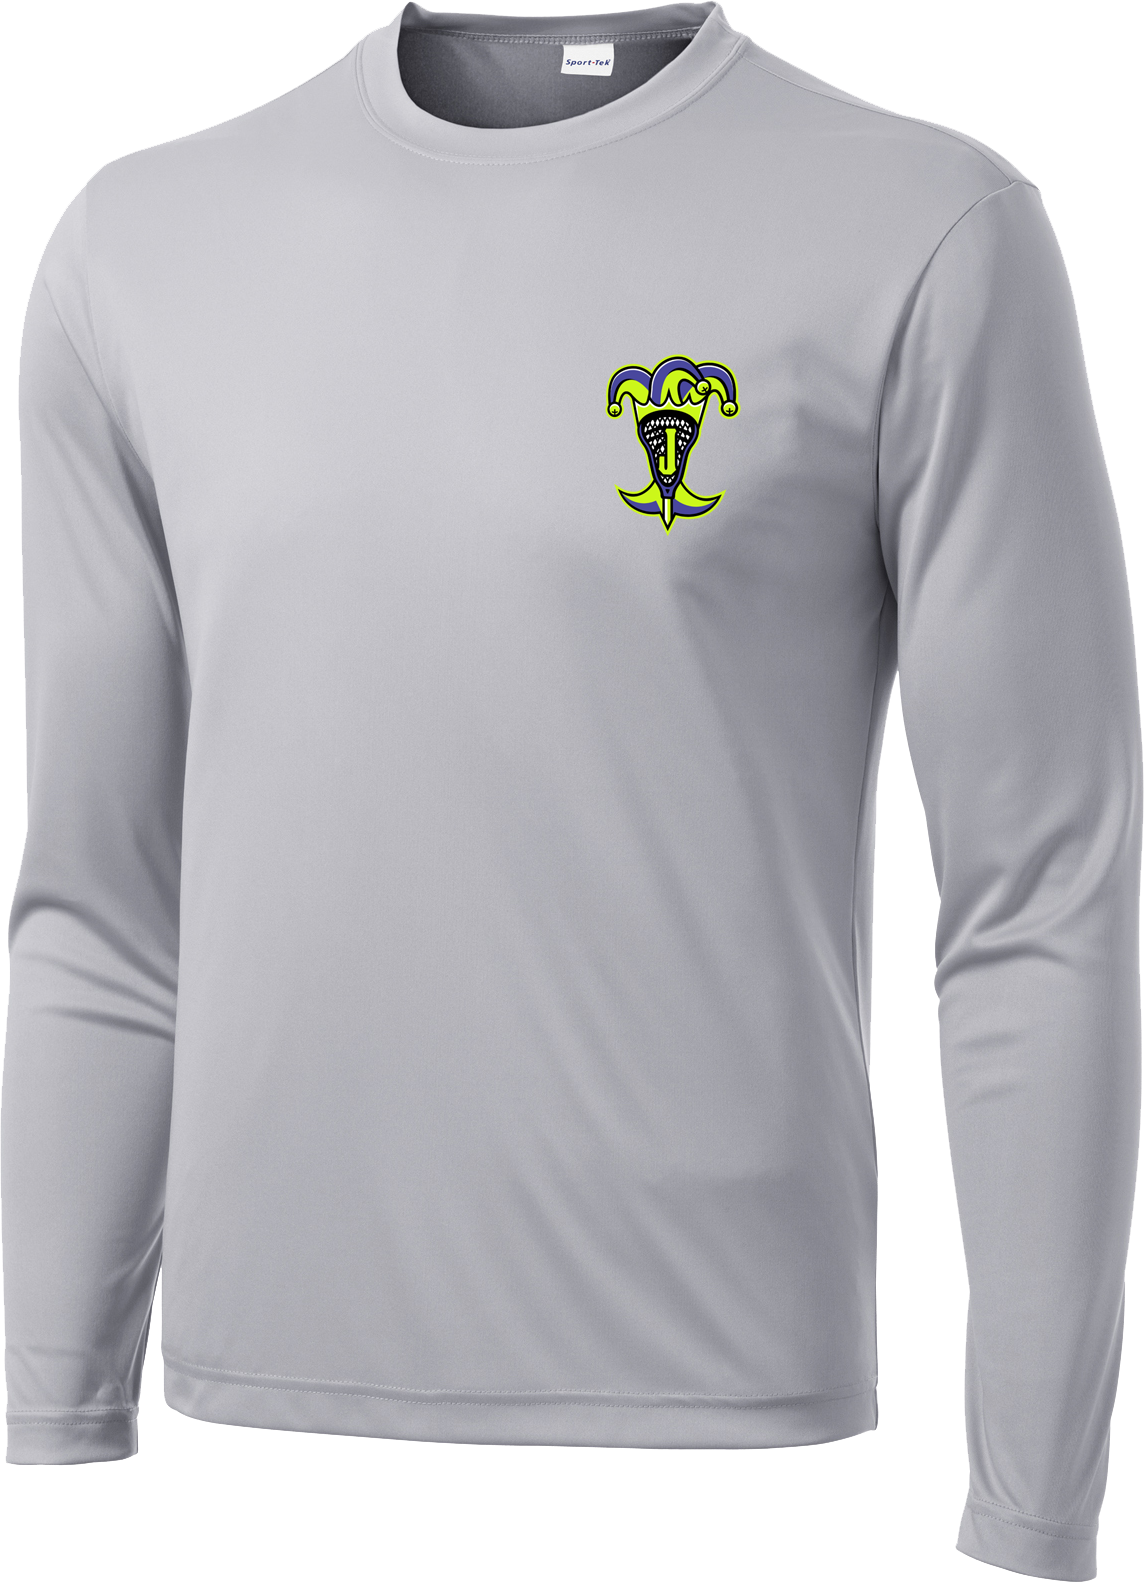 Epic Lacrosse Jokers Grey Long Sleeve Performance Shirt Alt Logo